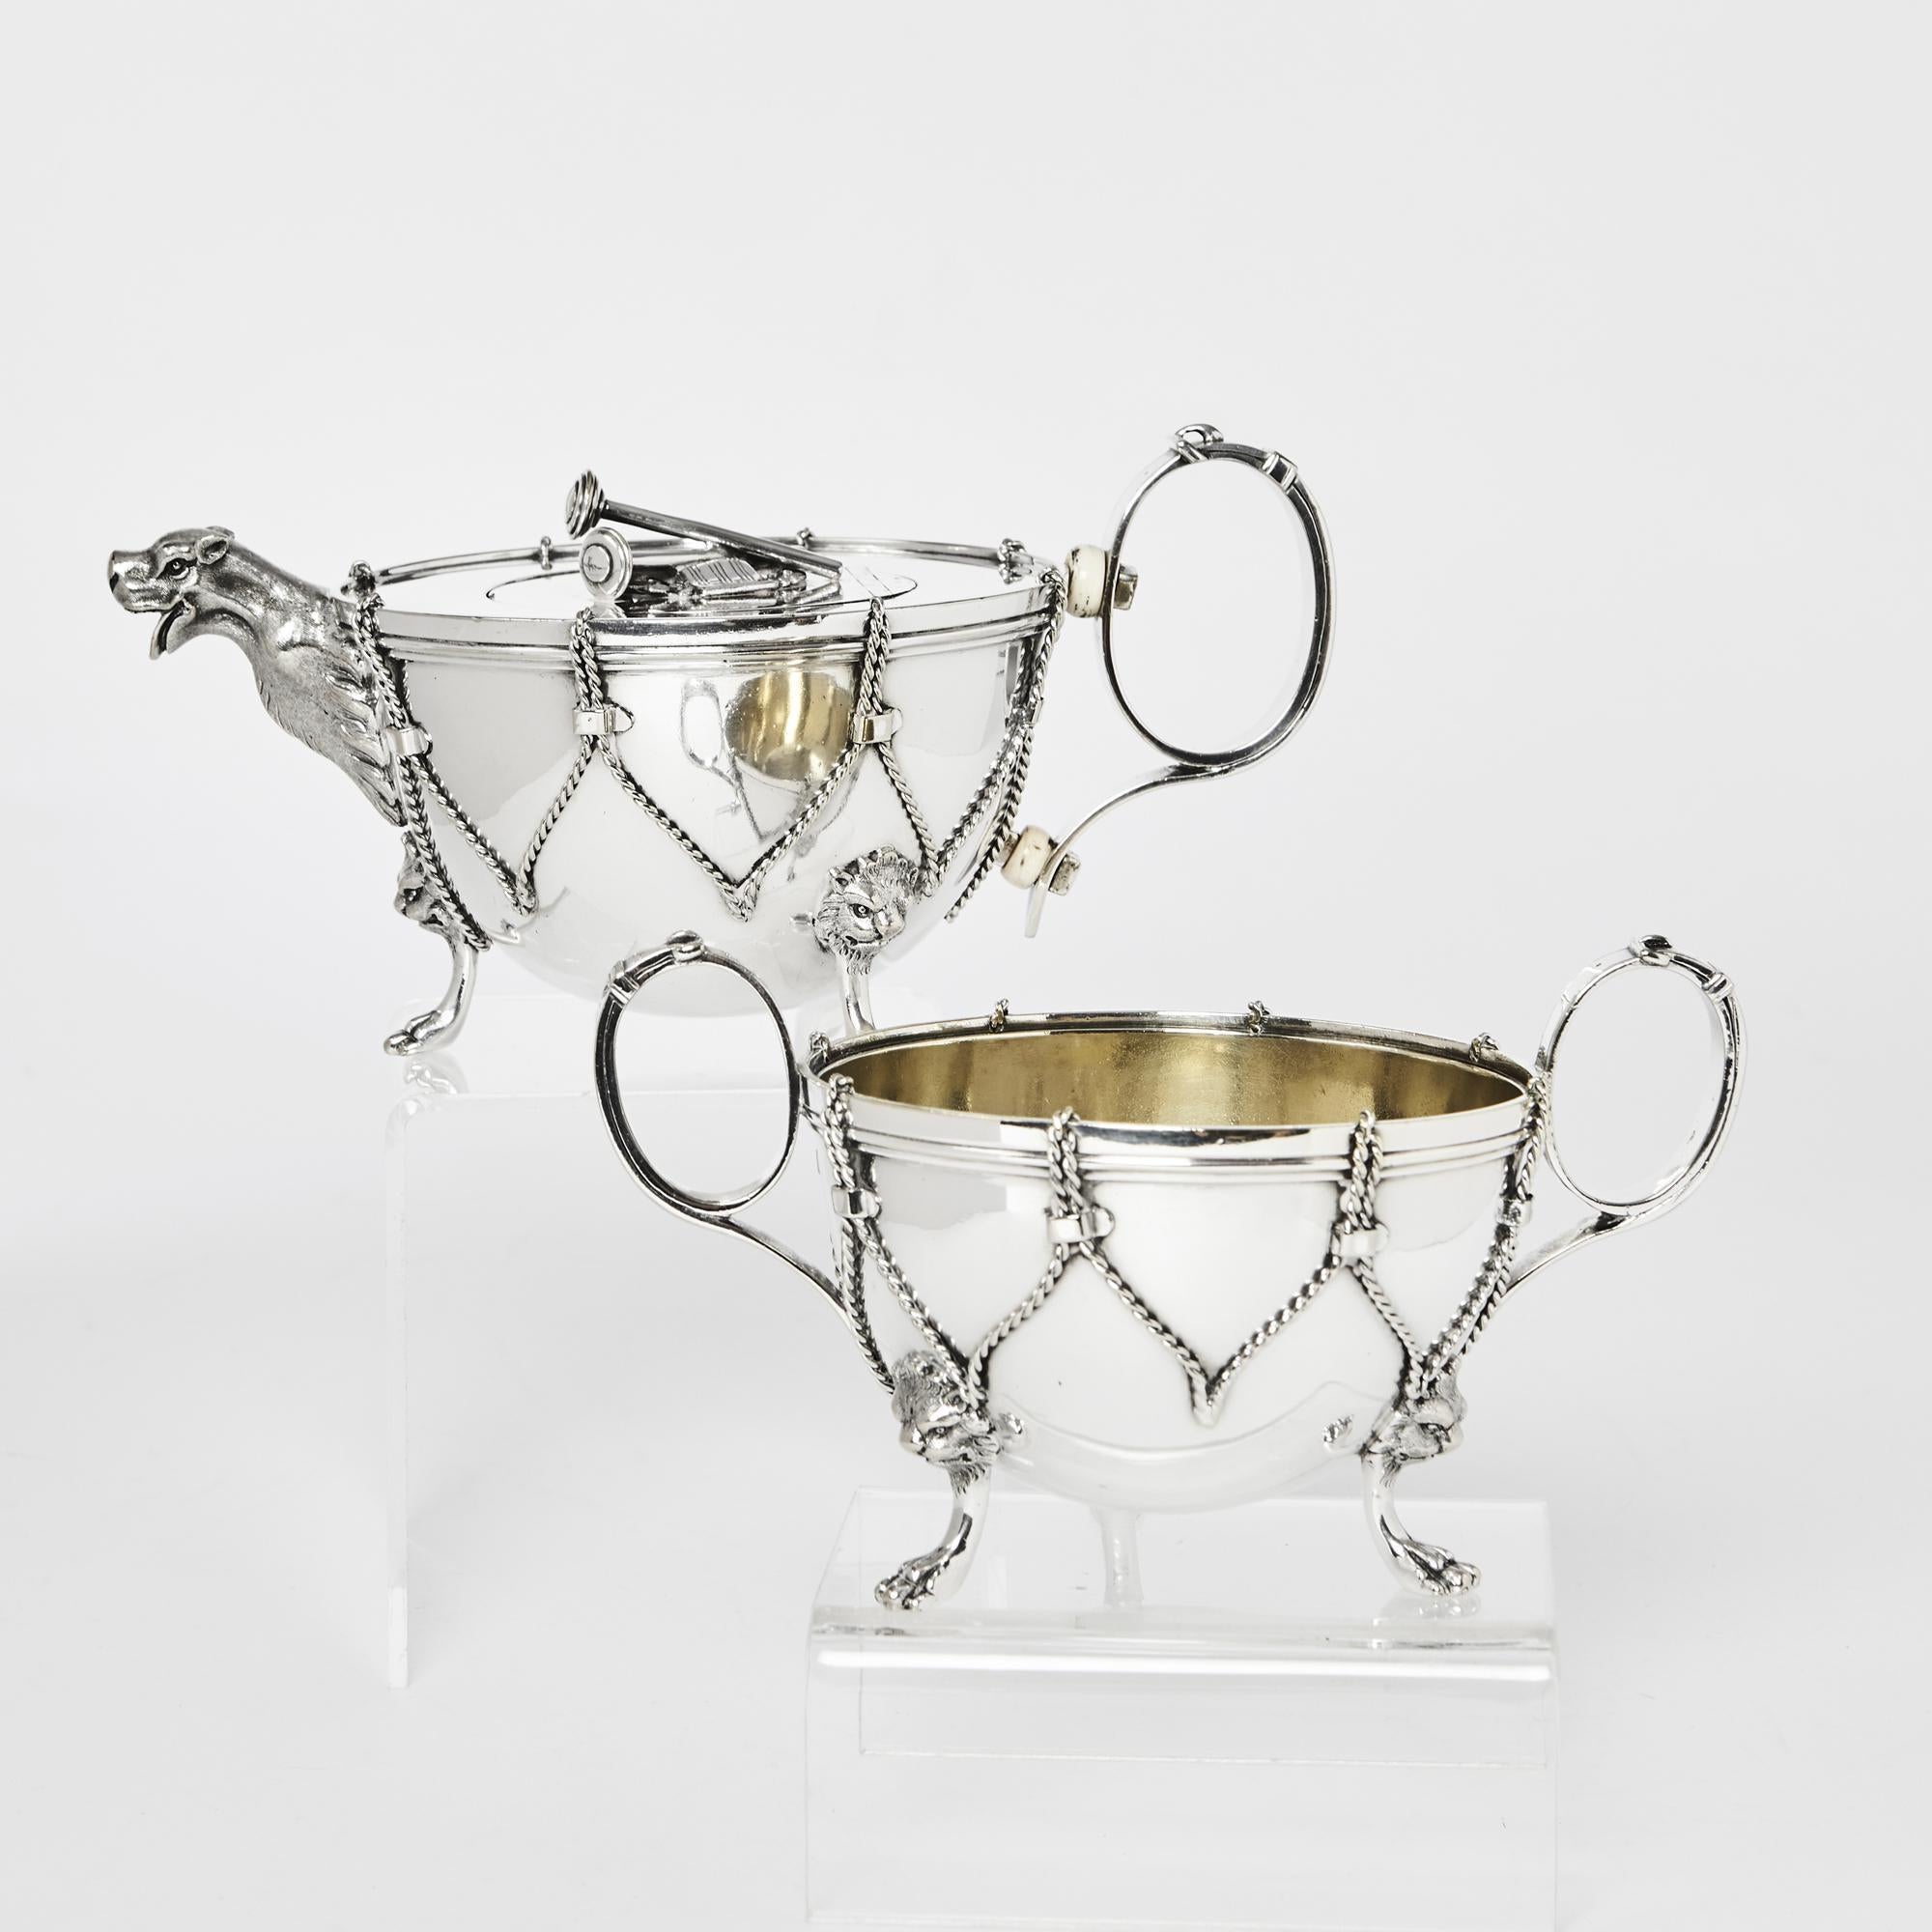 19th Century Rare Antique Silver Plated Kettle-Drum Tea Set For Sale